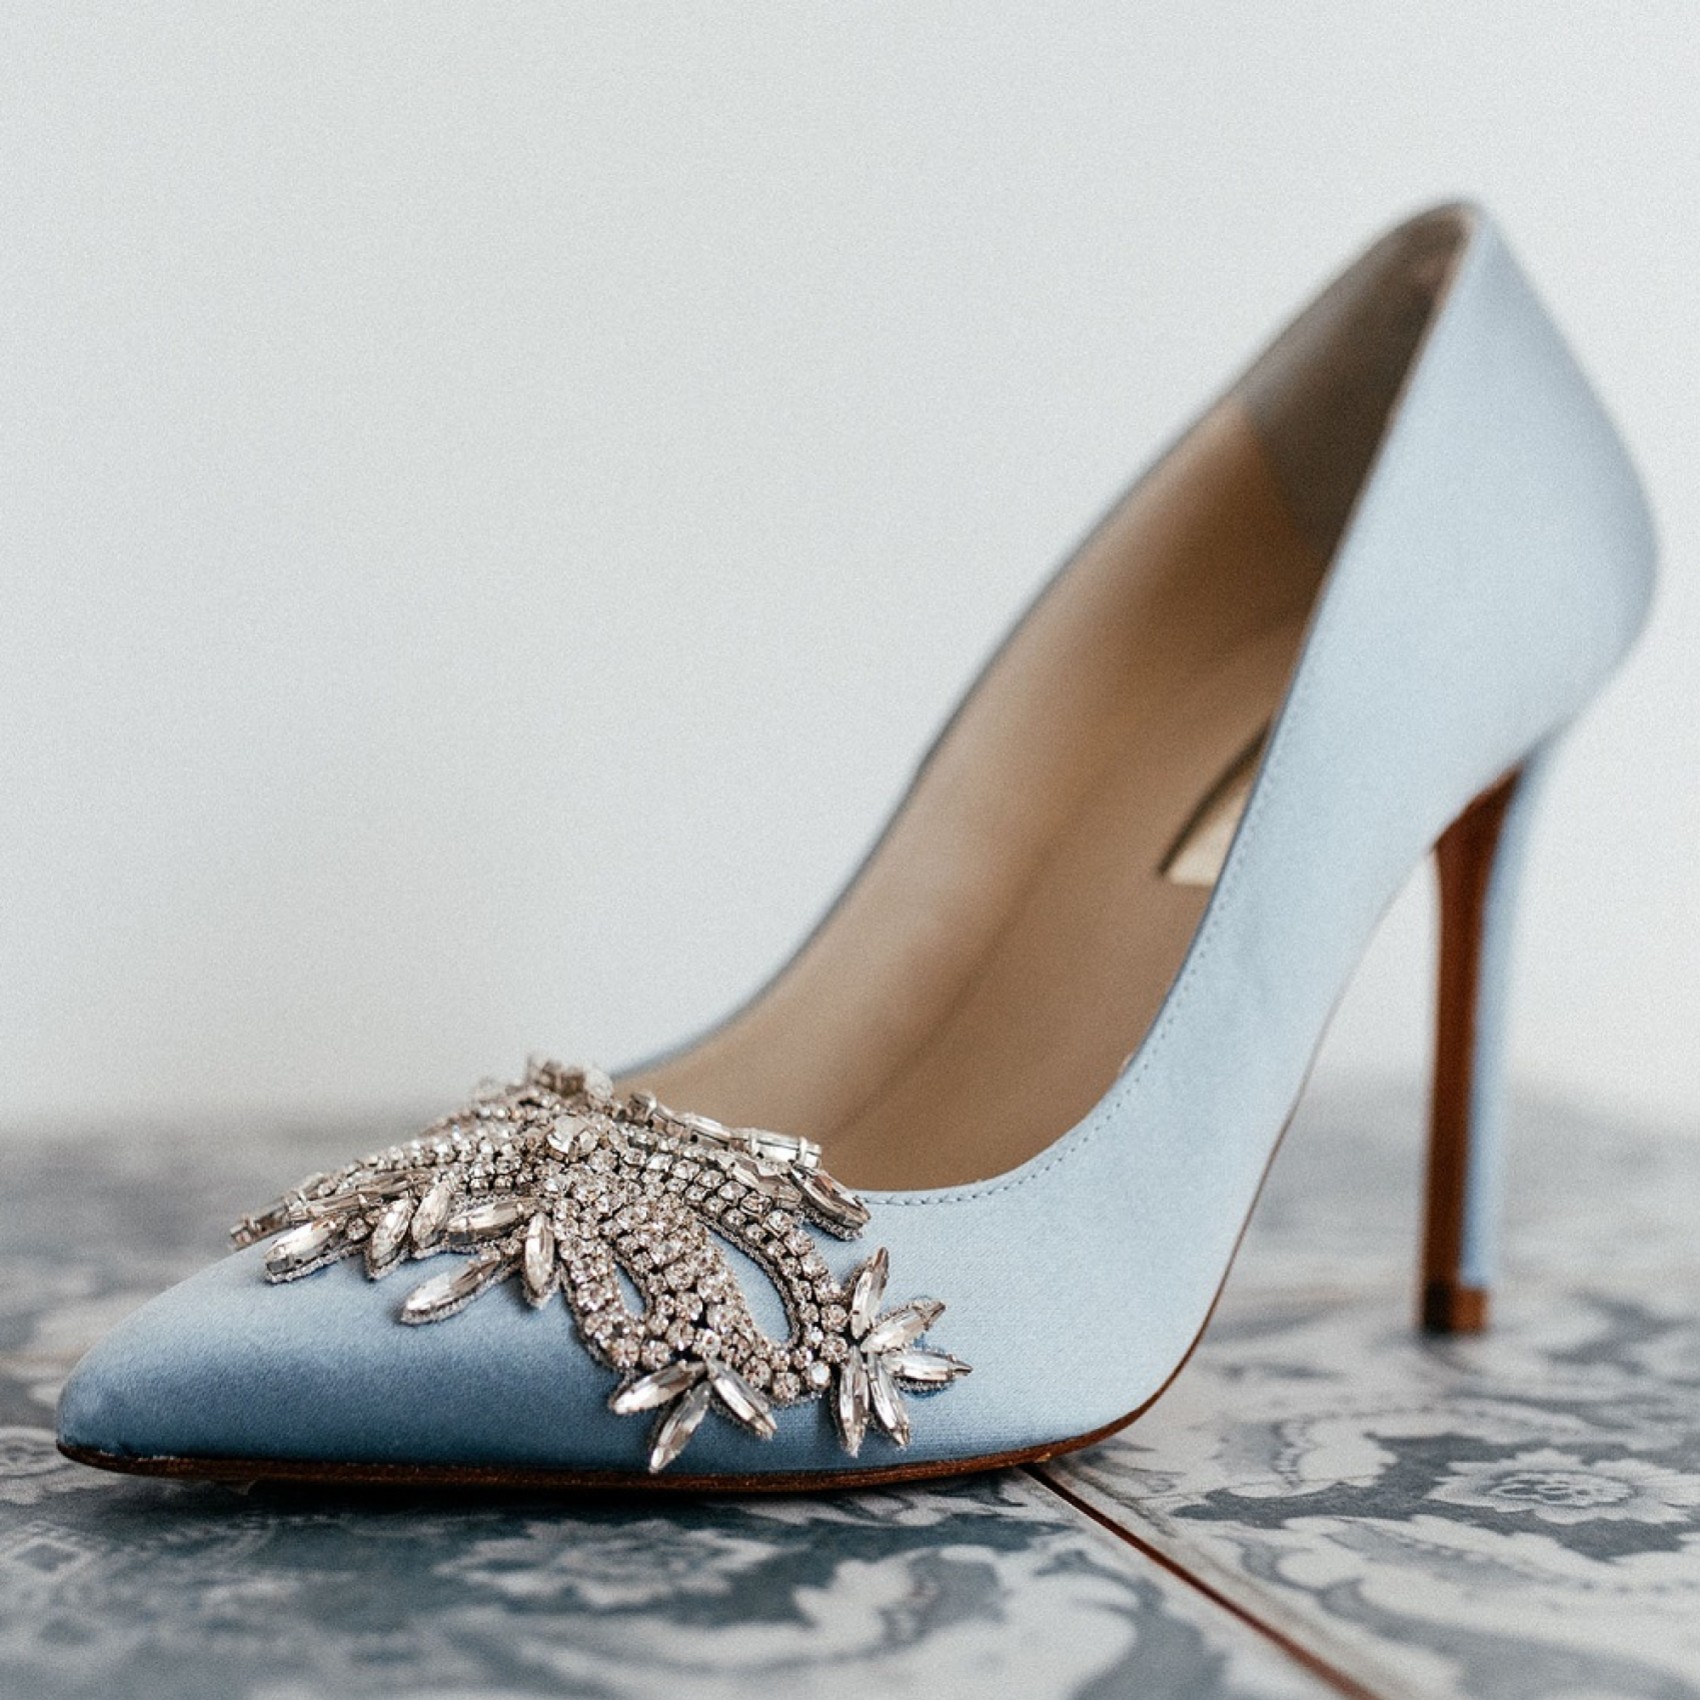 Freya Rose Celina Blue Satin Crystal Embellished Pointed Toe Courts